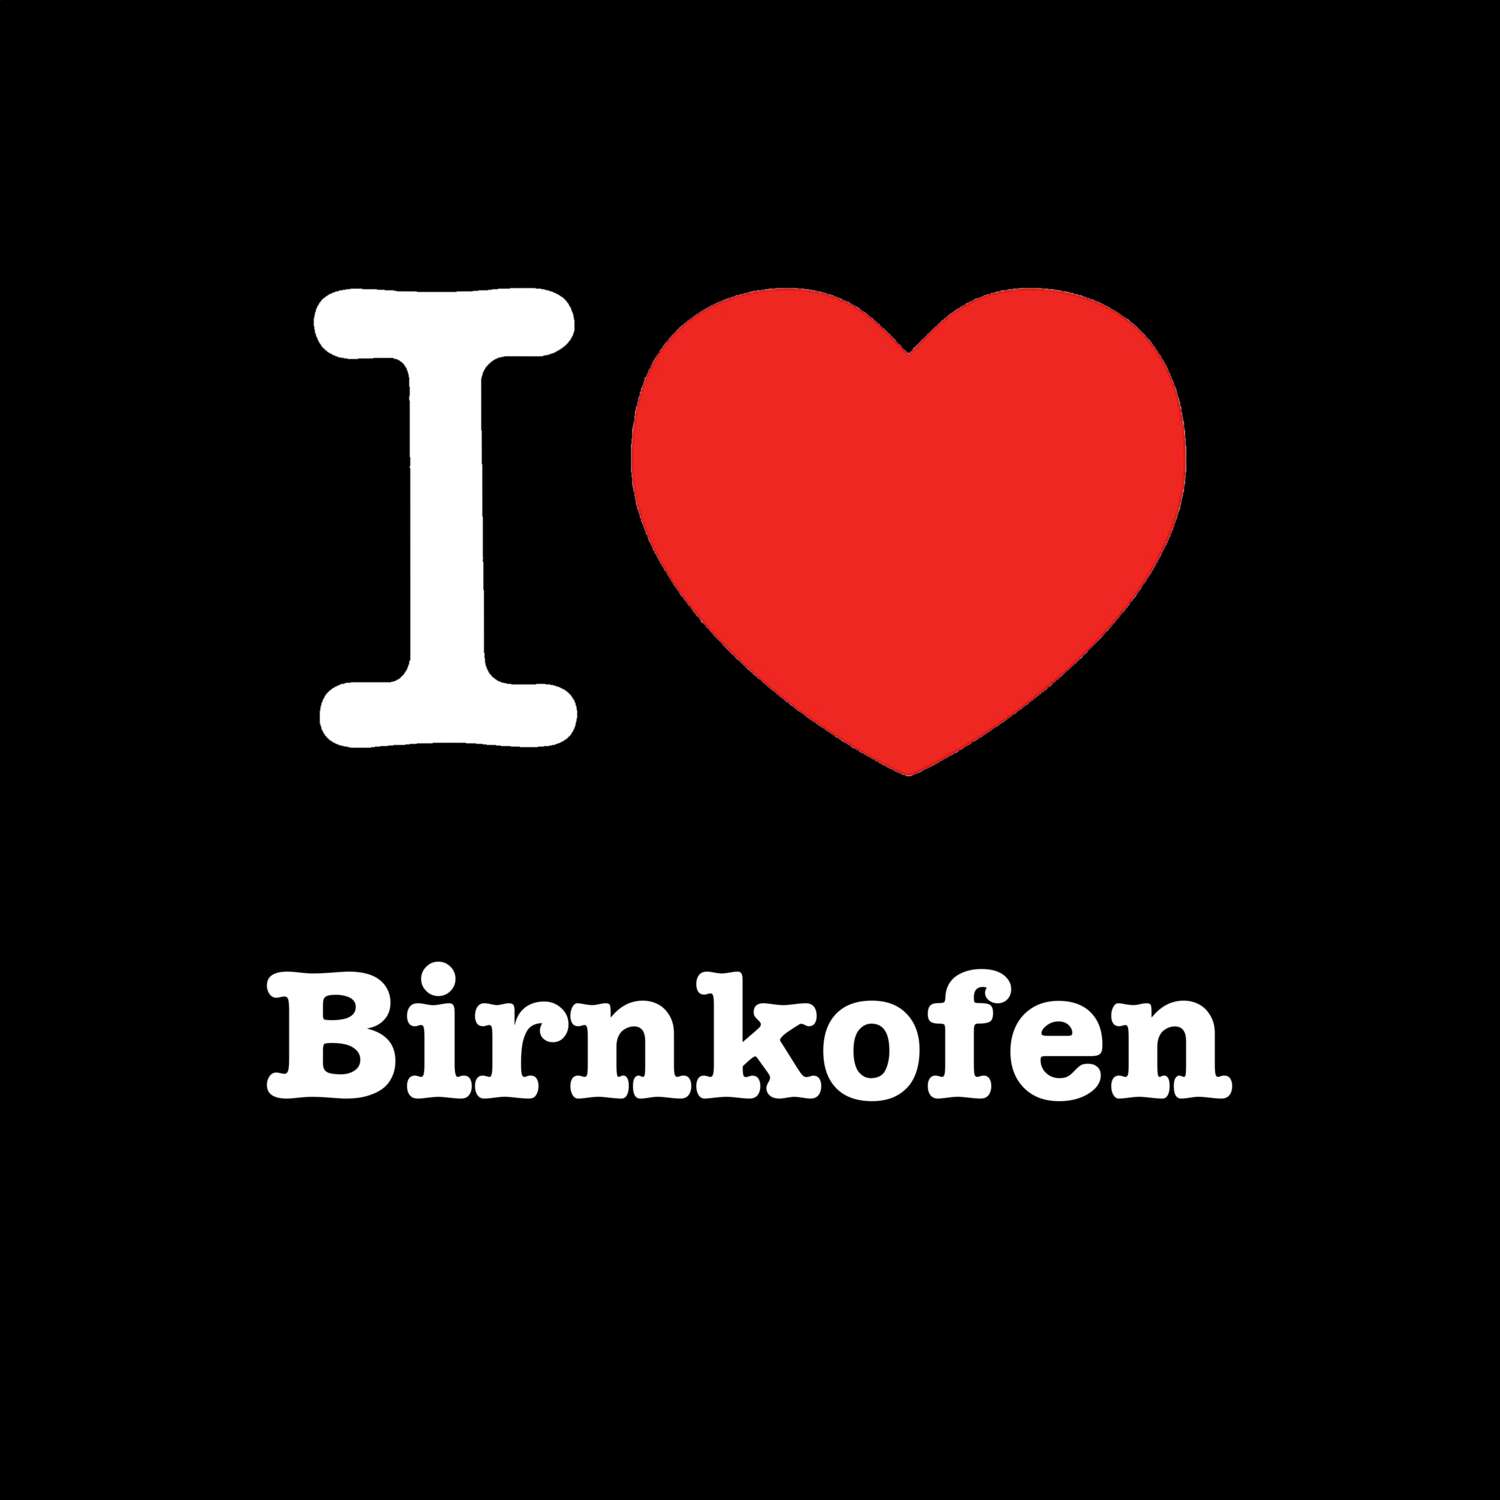 Birnkofen T-Shirt »I love«